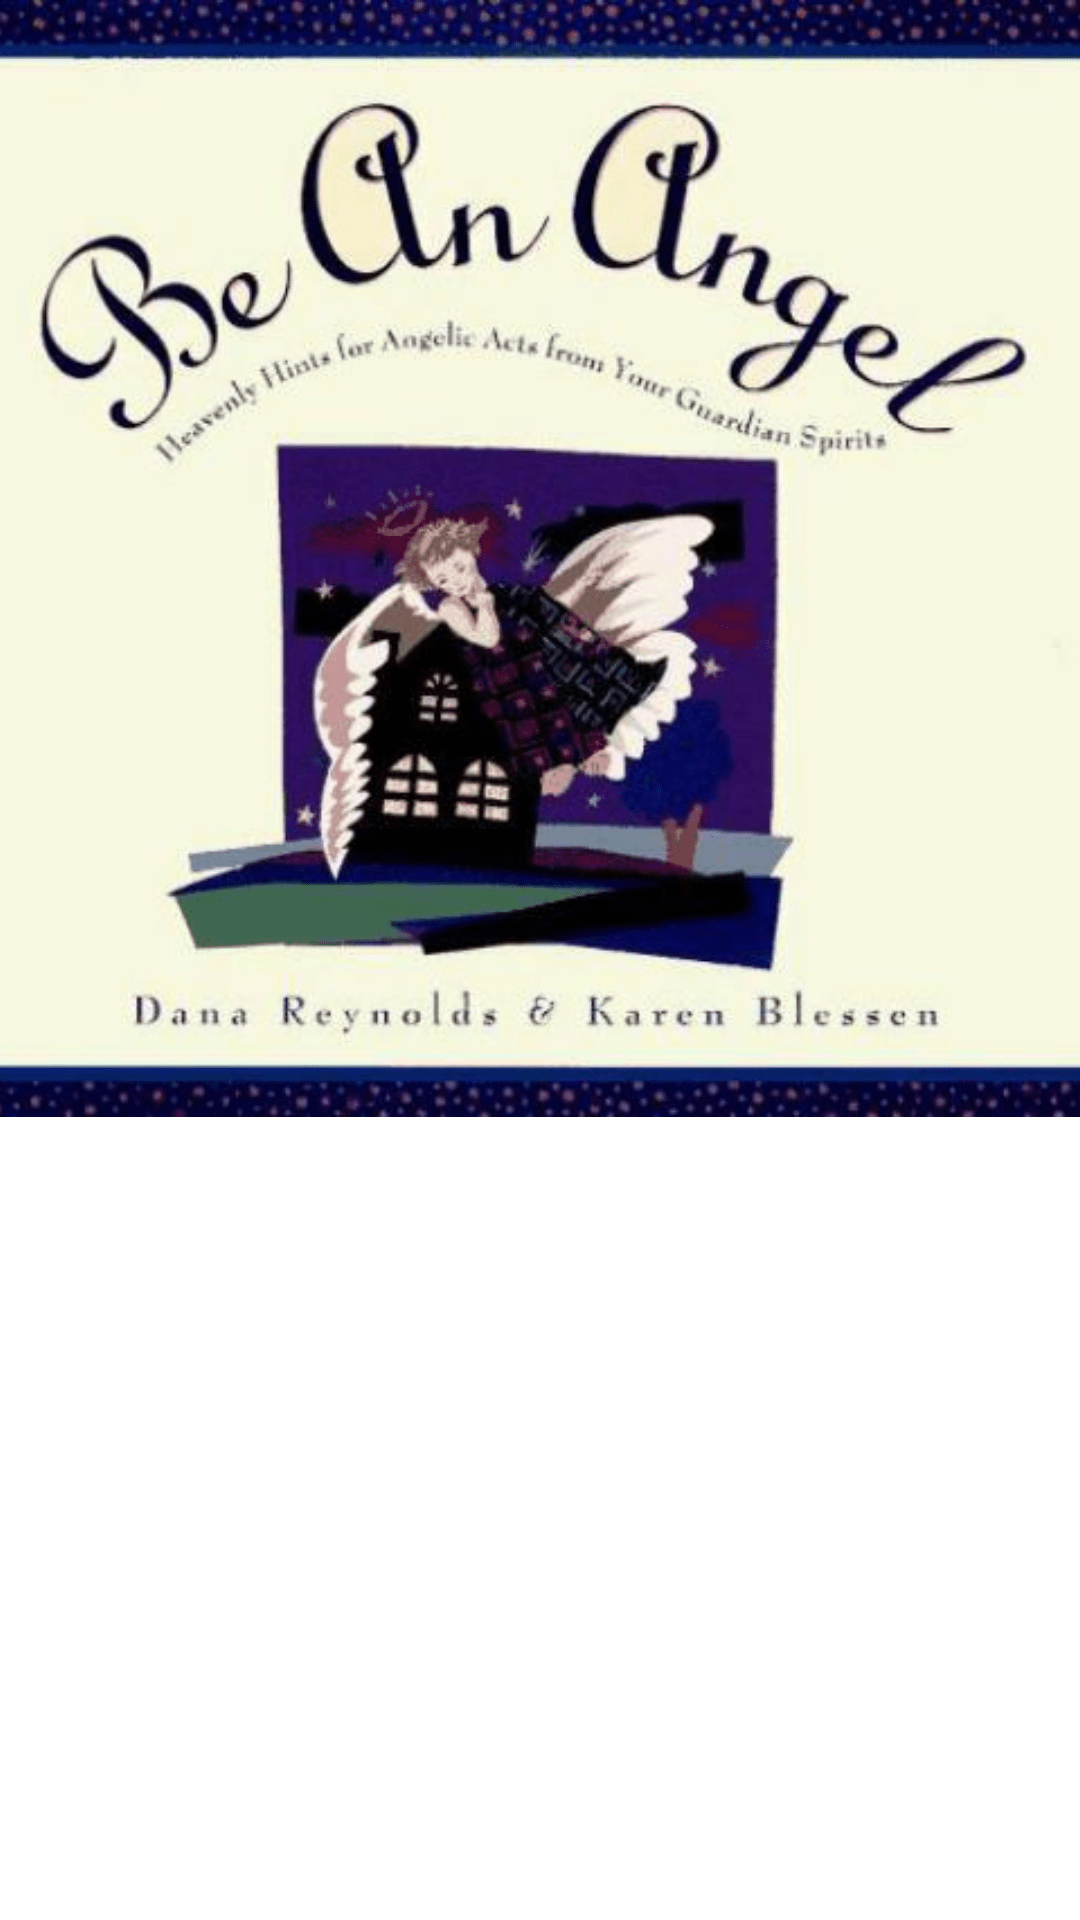 Be an Angel by Dana Reynolds